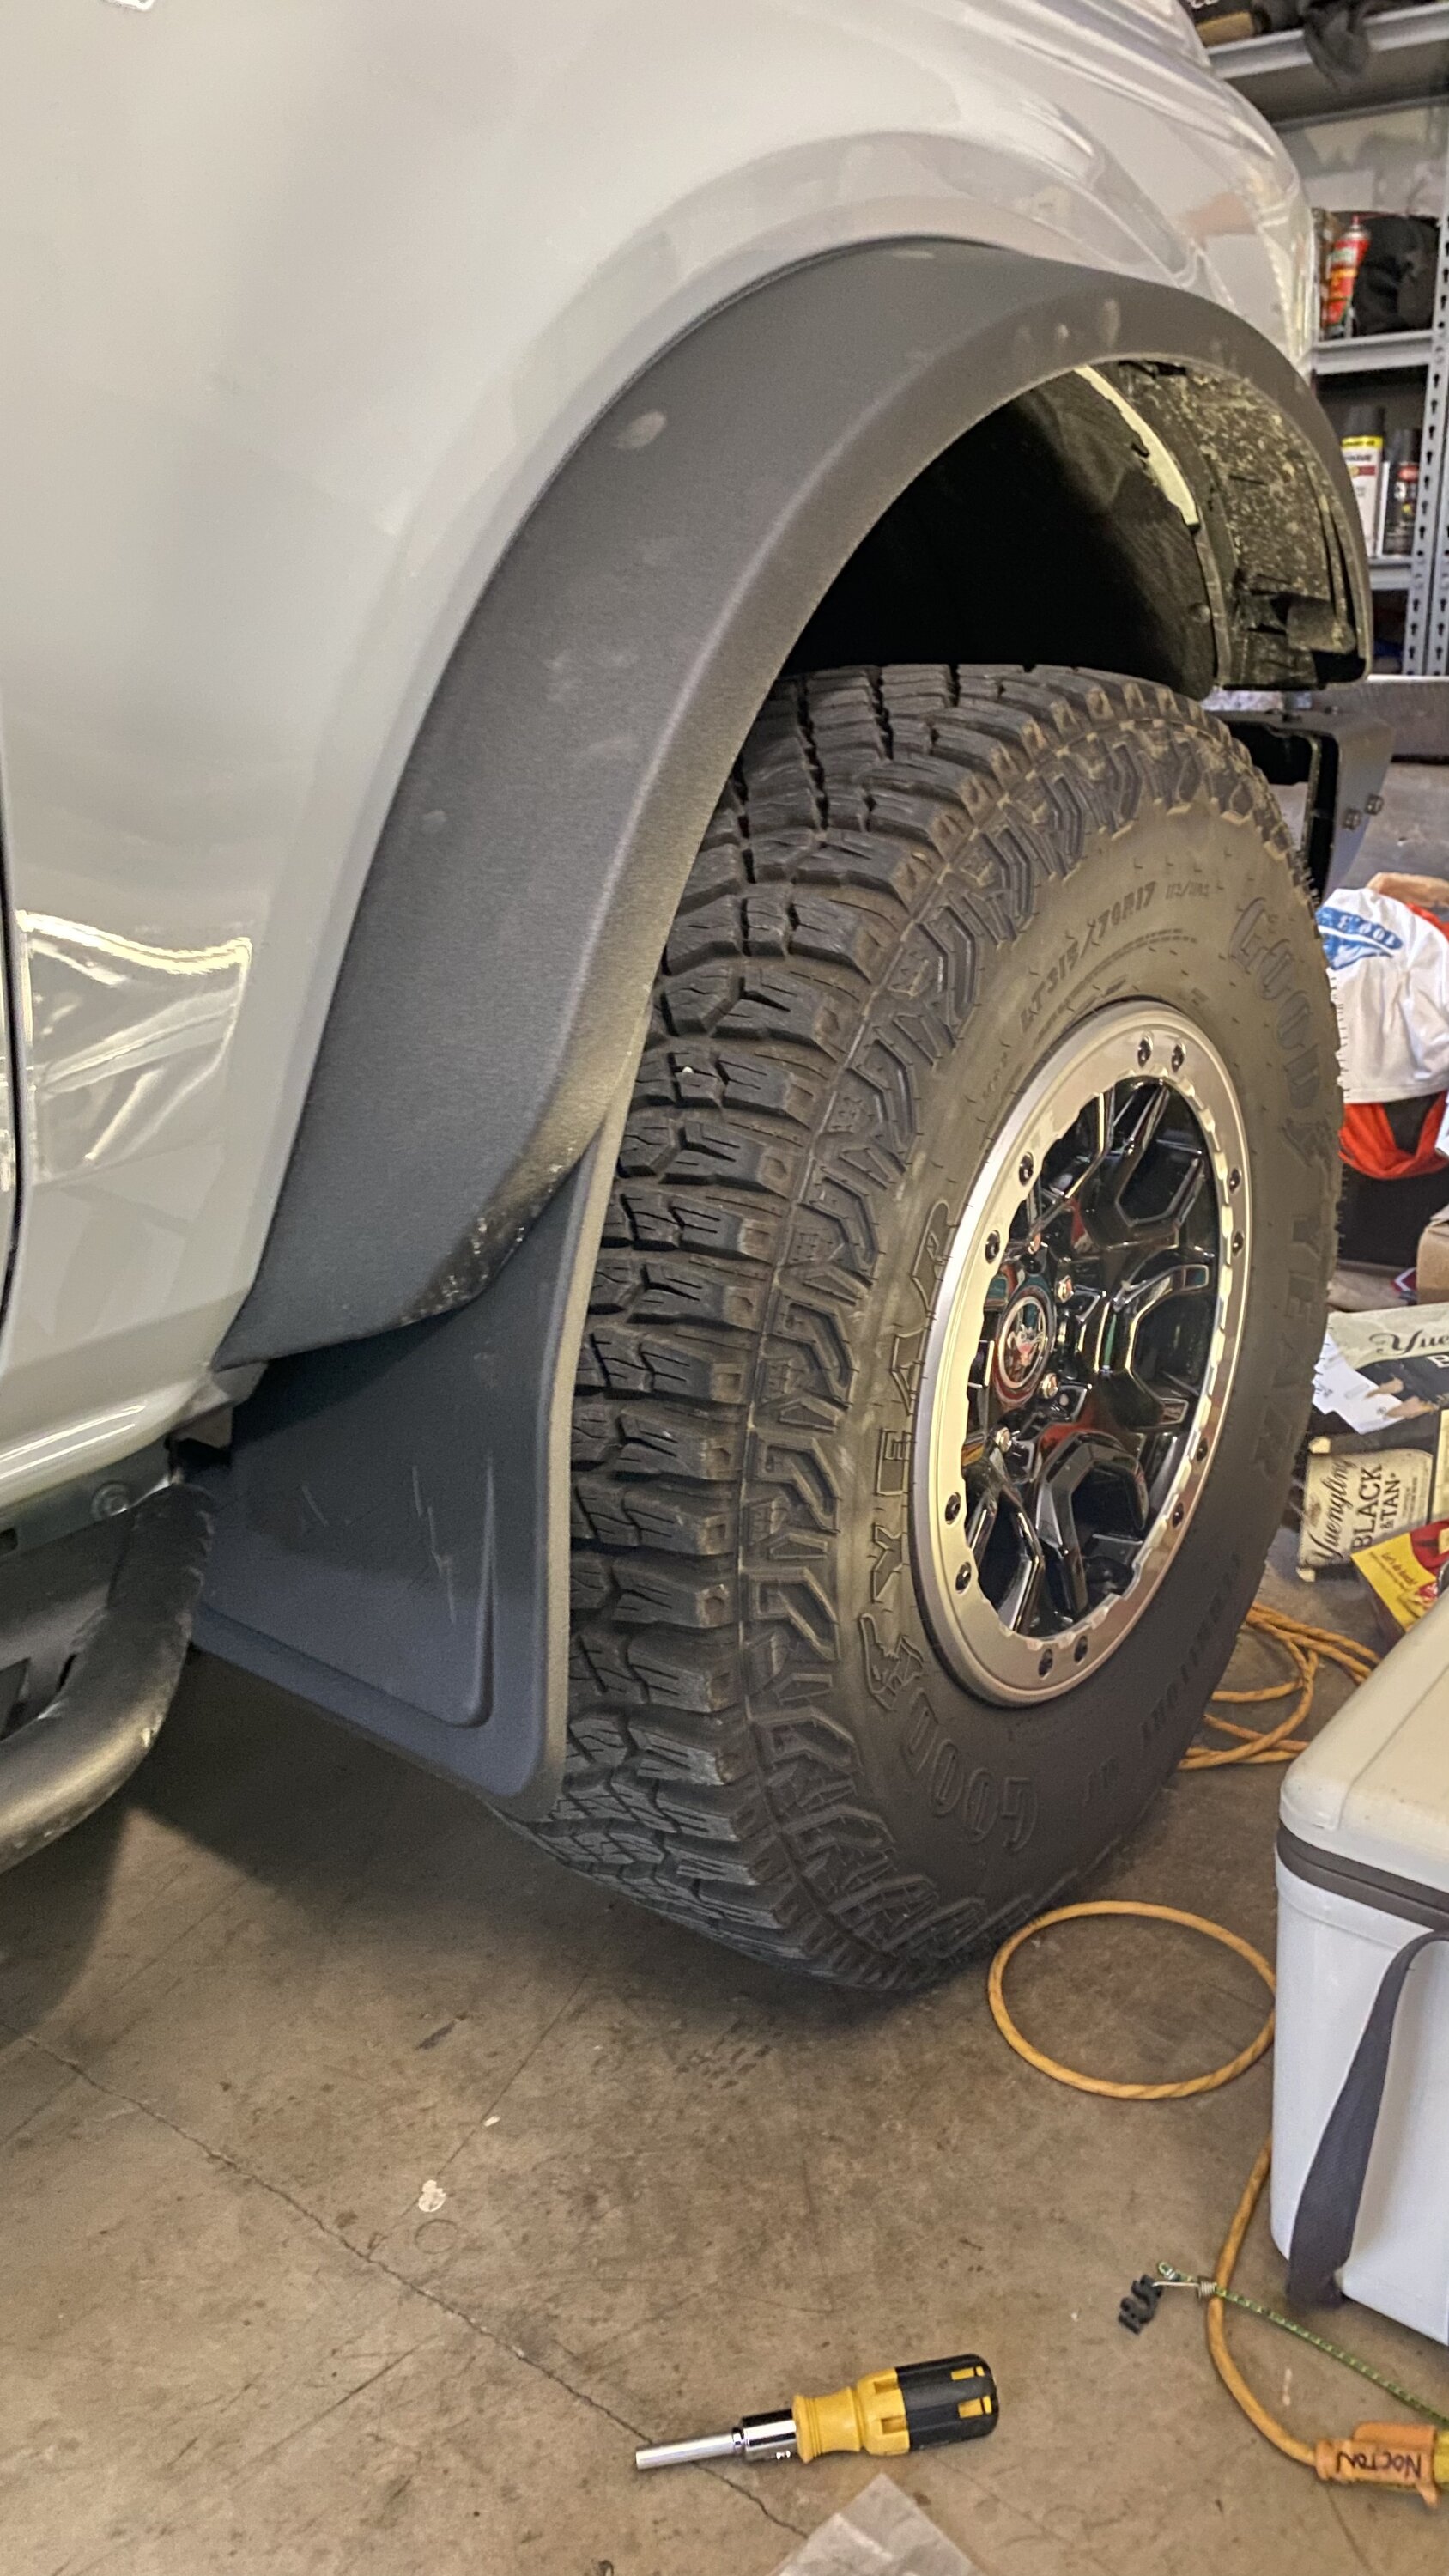 Ford Bronco Mabett Mud Flaps Fits Sasquatch set that accommodates factory rock rails or tube steps A7D85119-9DCC-4392-85B3-E2B860838C1A